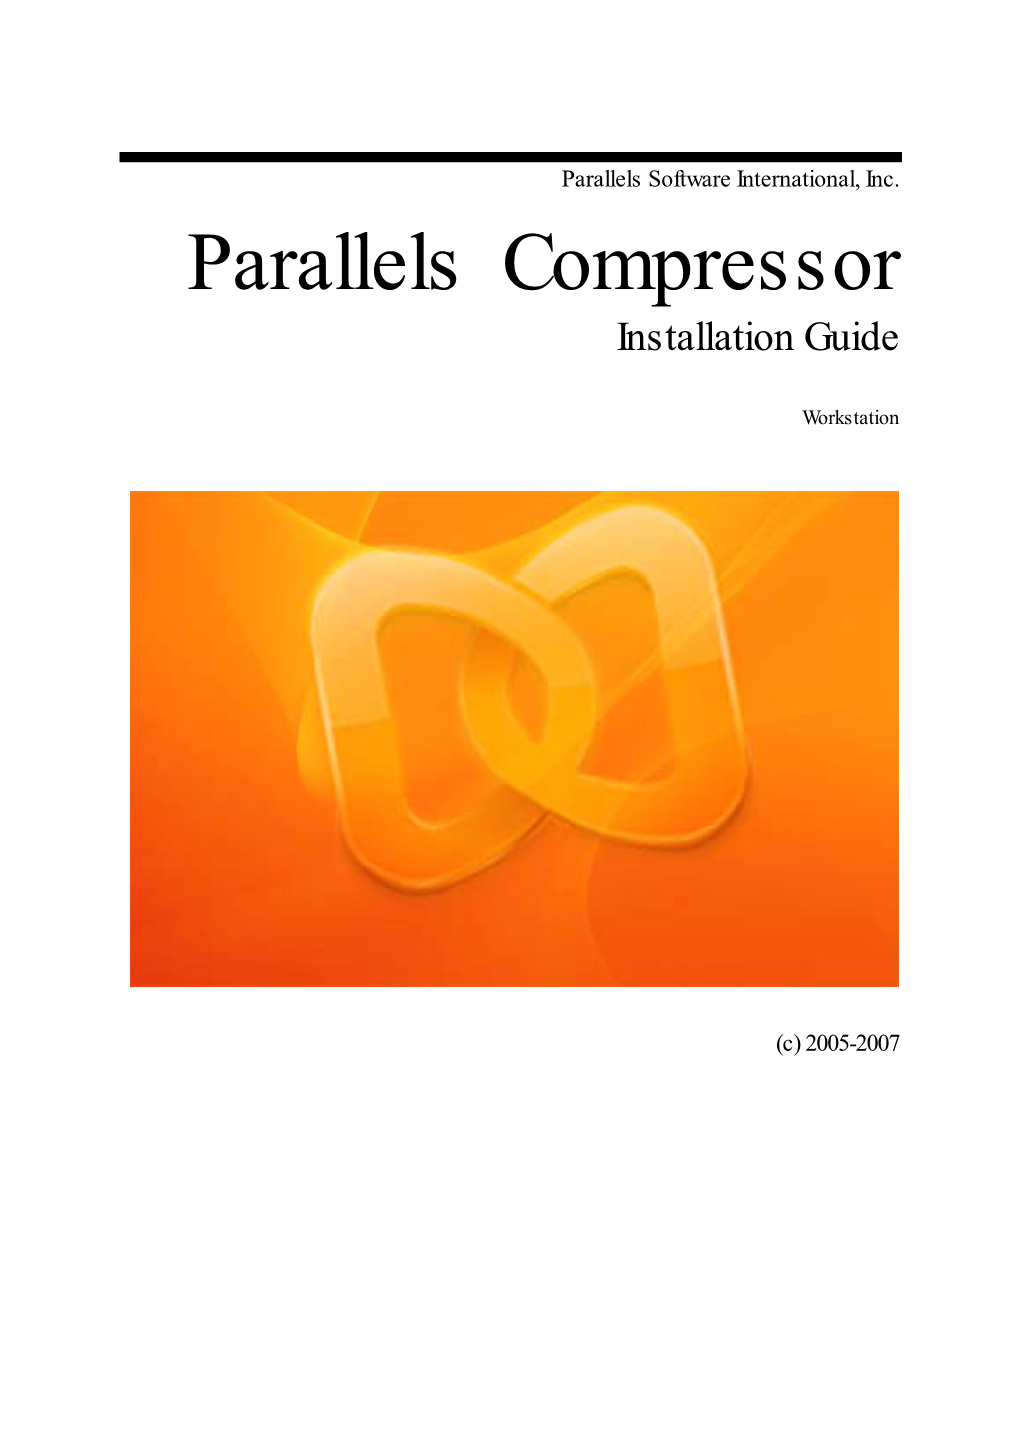 Parallels Compressor Installation Guide